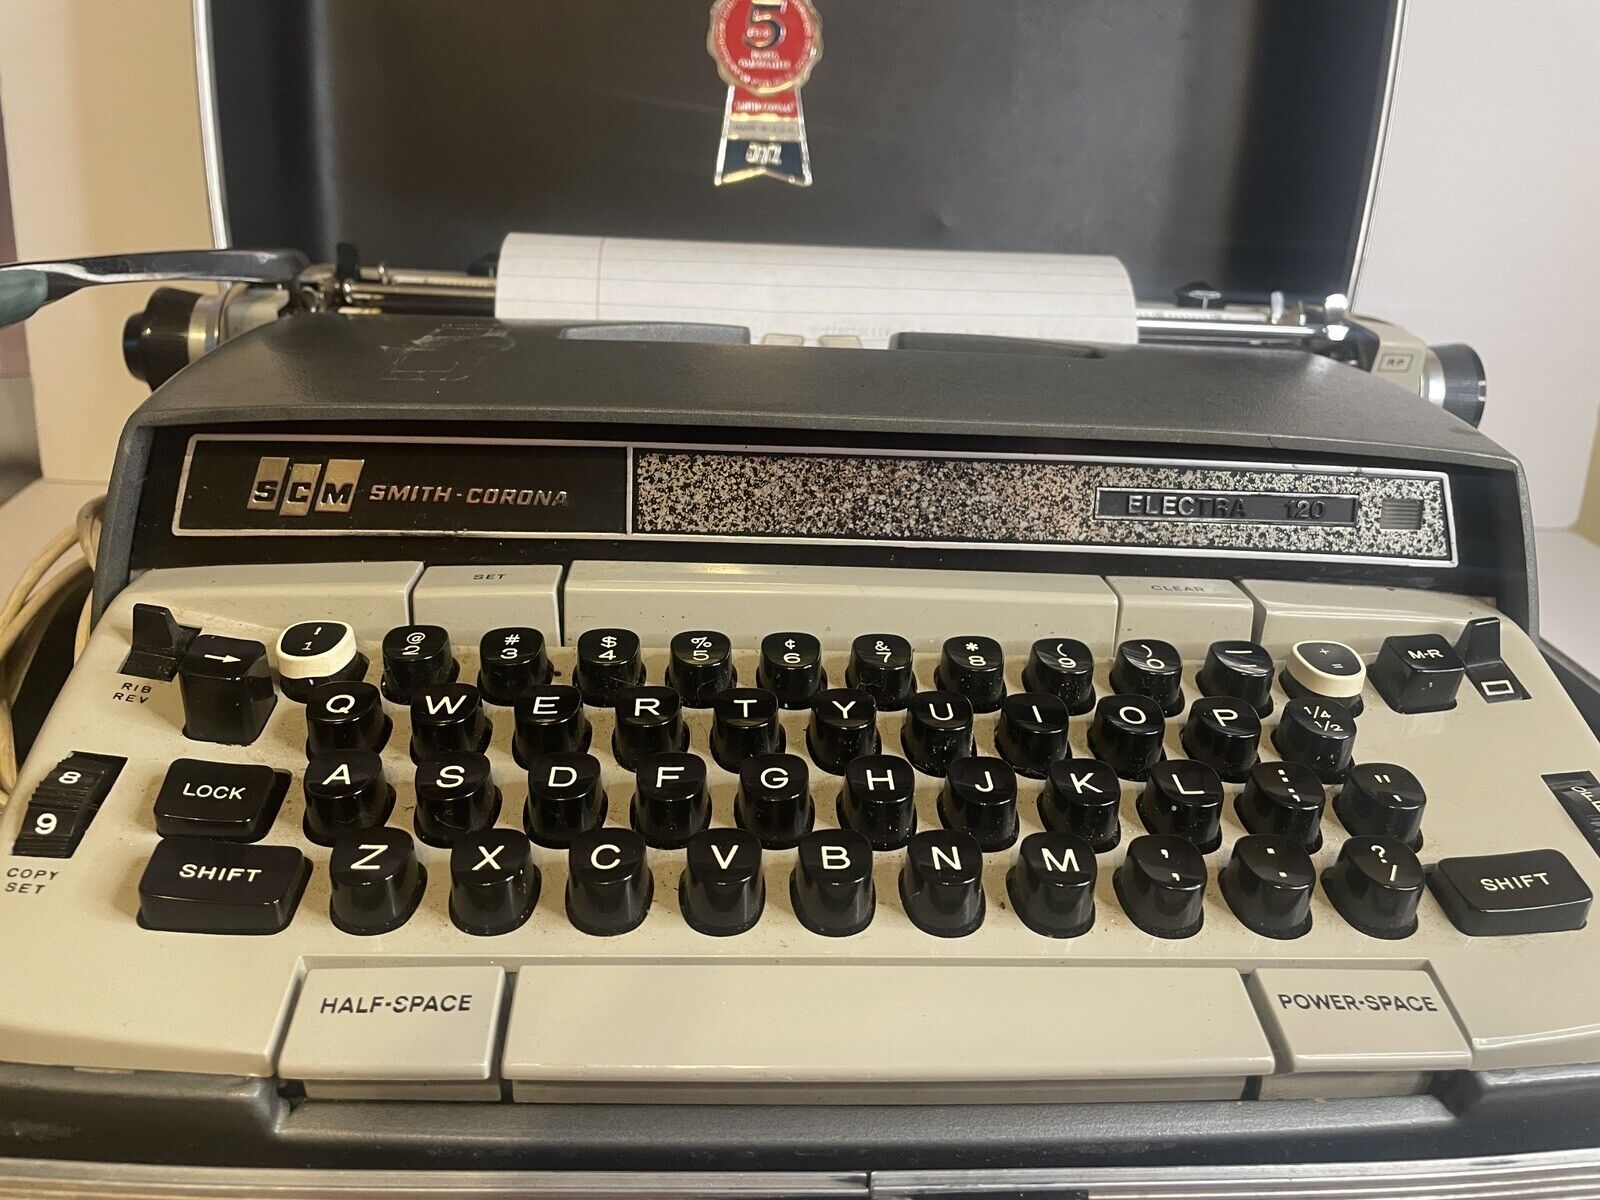 Vtg SCM Smith Corona Electra 120 Typewriter with Hard Case and Key-Tested Works